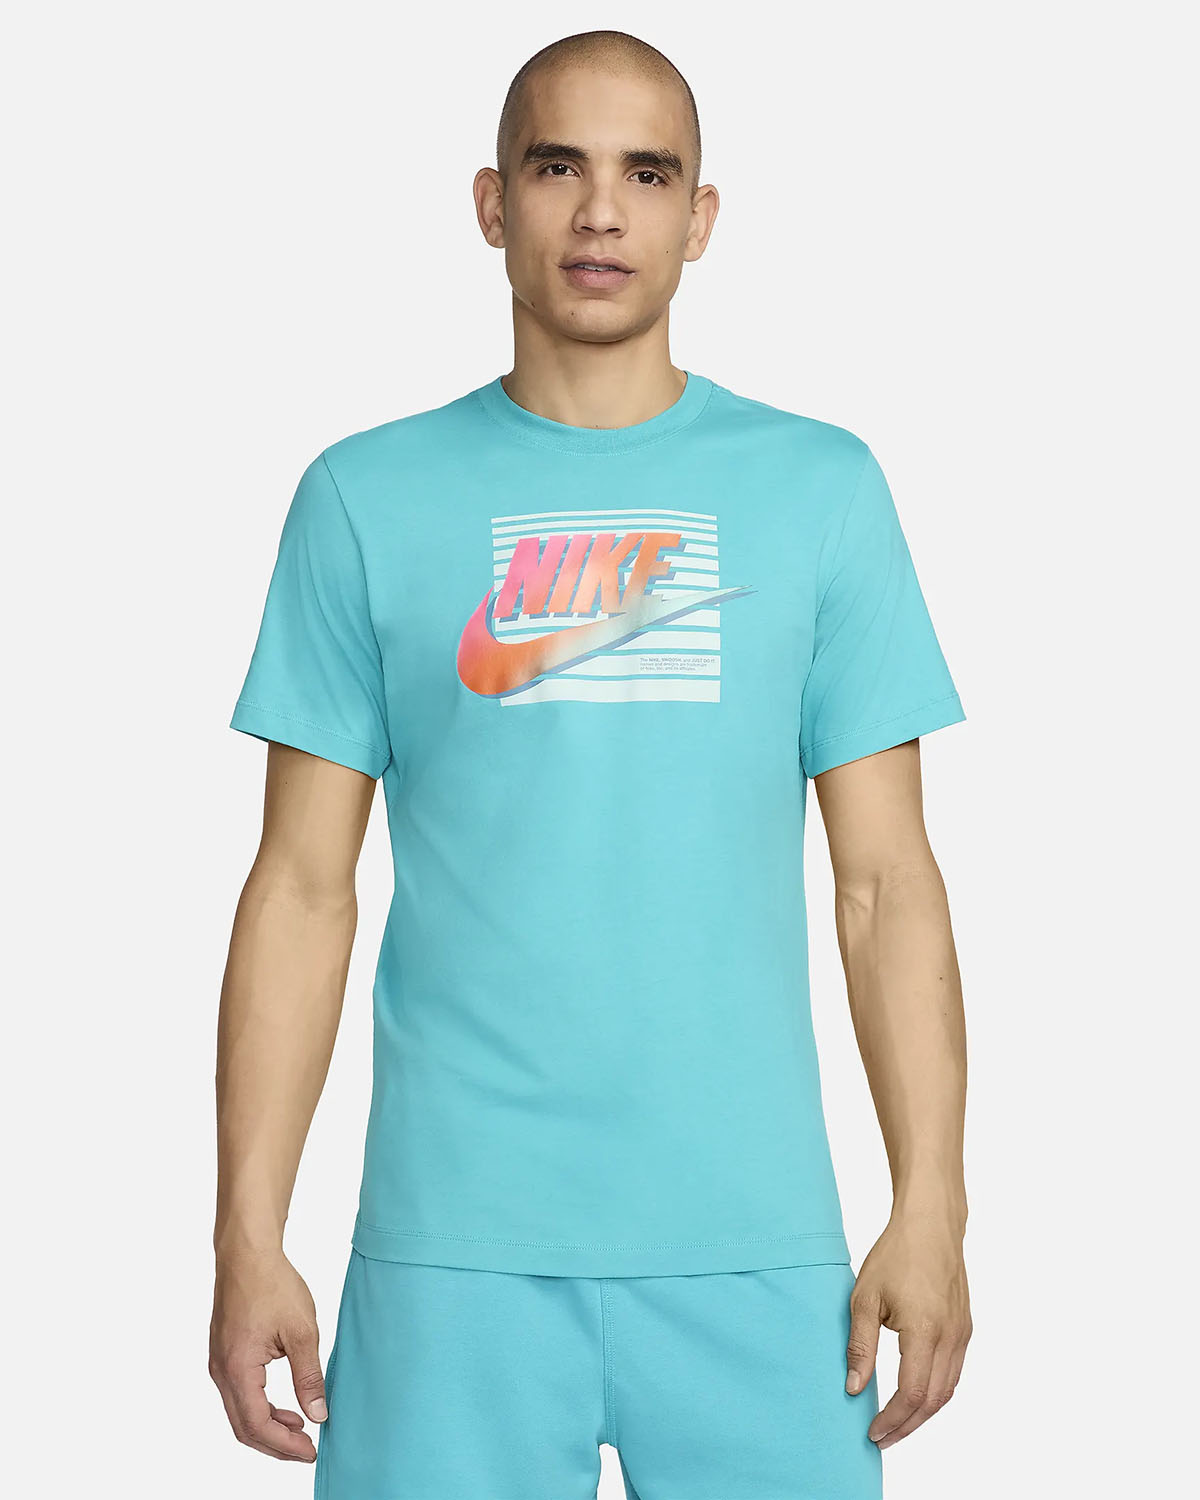 Nike Sportswear Graphic T Shirt Dusty Cactus 1